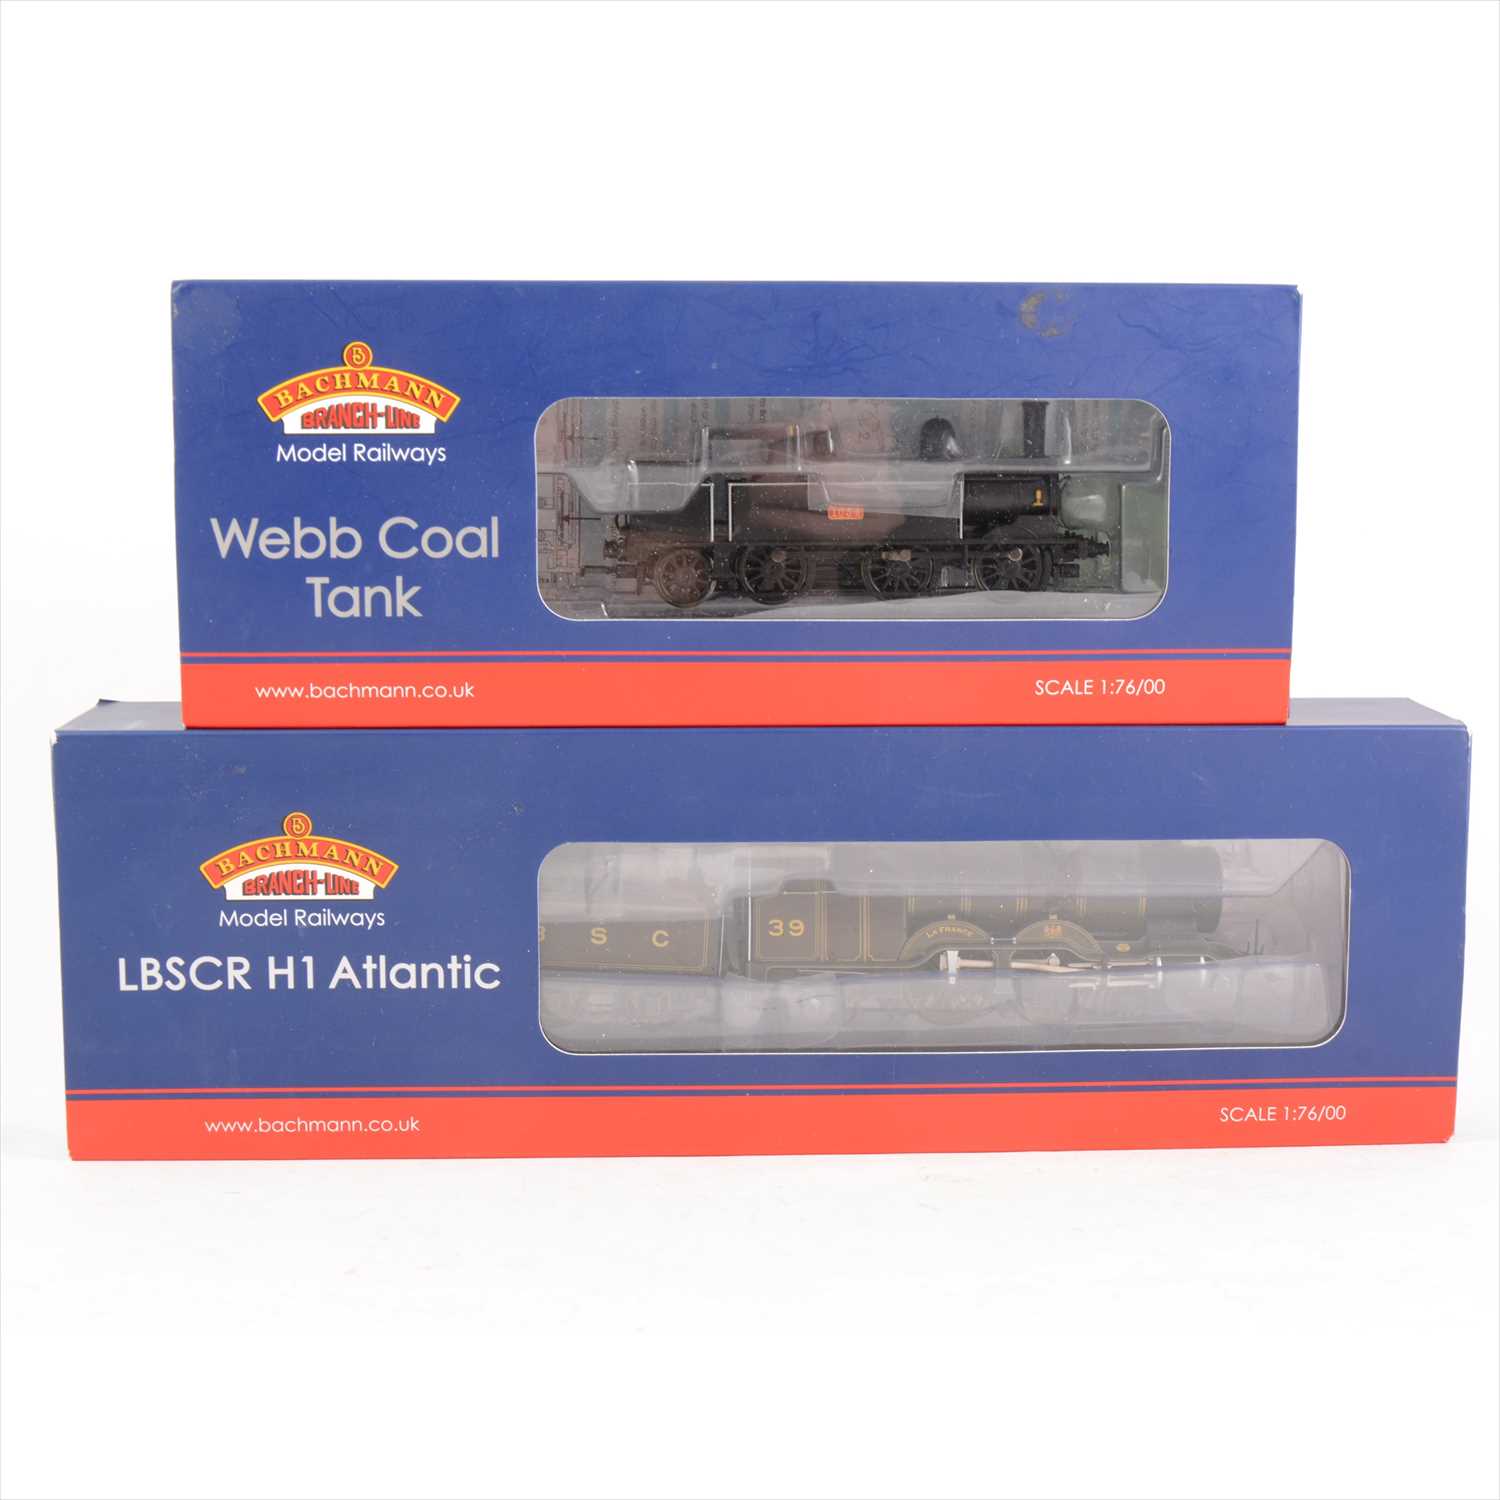 Lot 49 - Two Bachmann OO gauge model railway locomotives; 35-050 and 31-910.